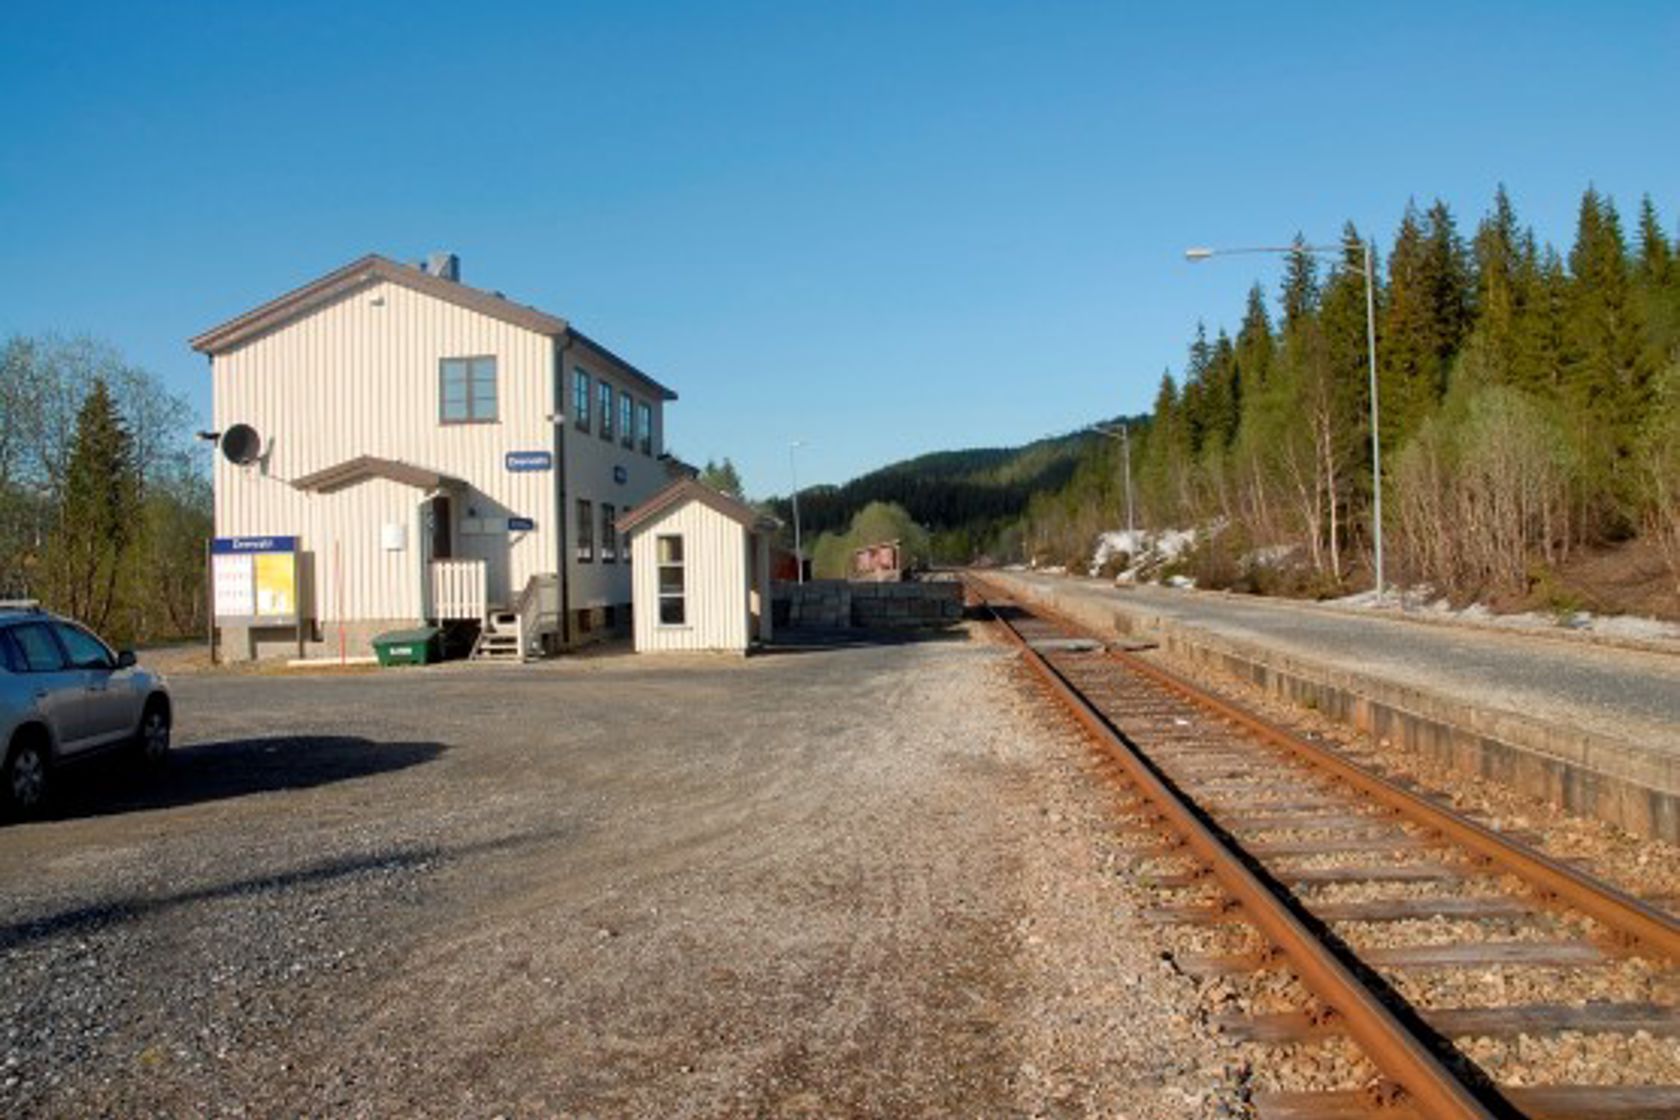 Exterior view of Drevvatn station